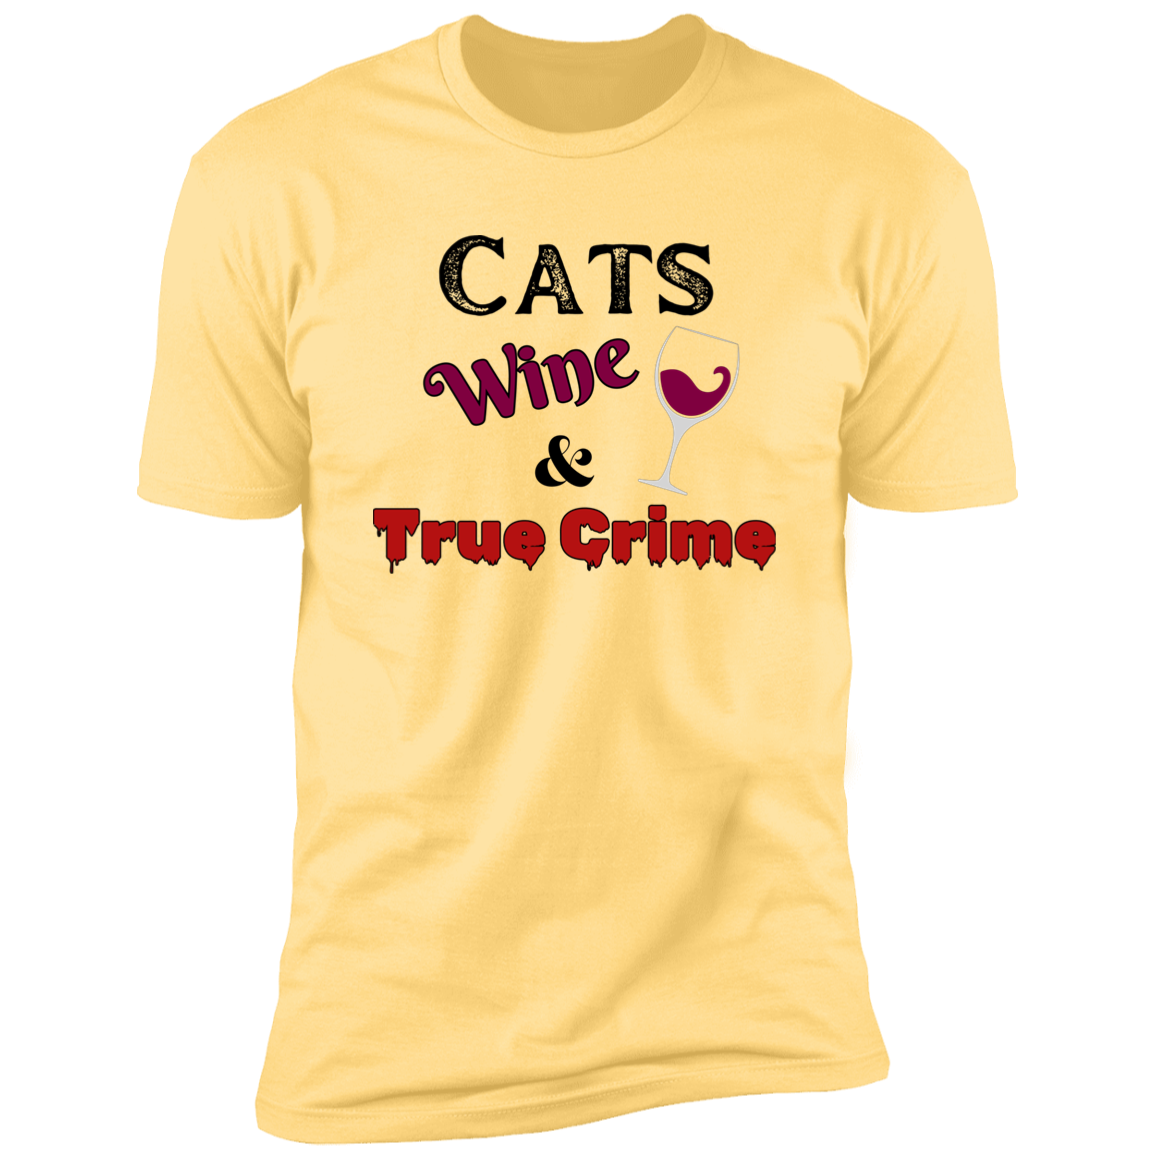 Cats Wine & True Crime T-shirt, Cat shirt for humans, funny cat shirt, in banana cream